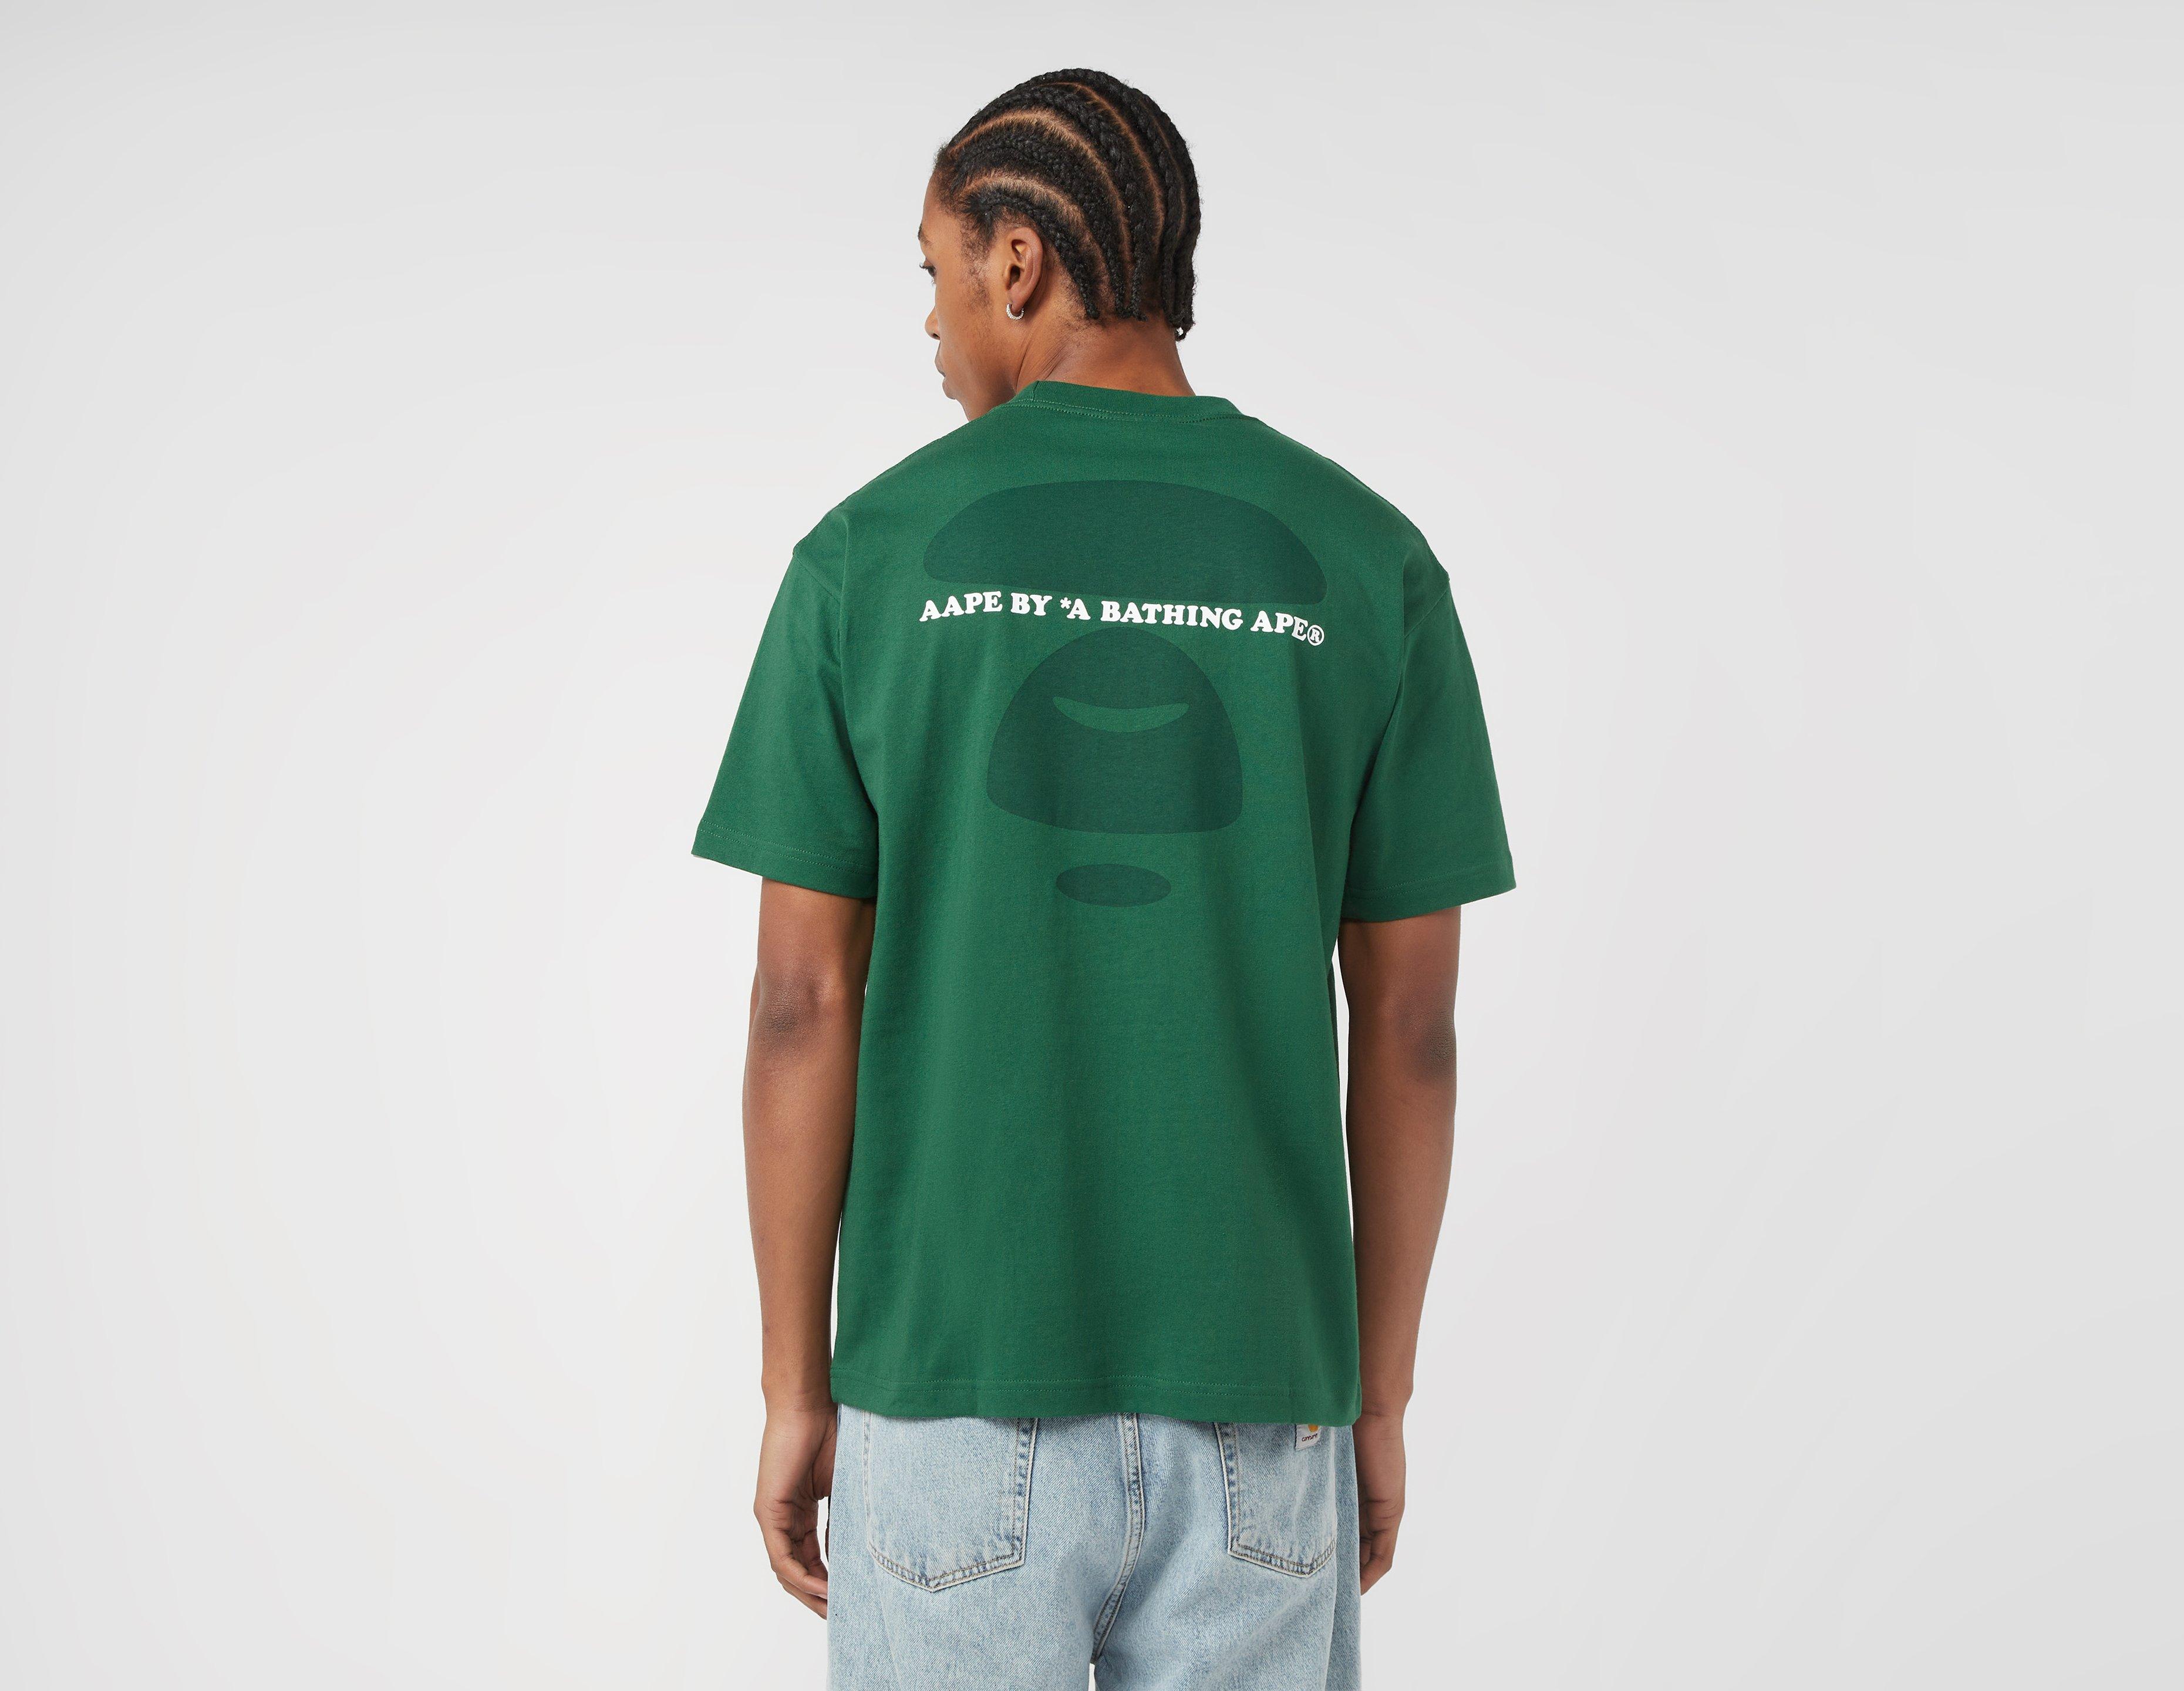 T-shirt Gore Wear R7 verde By Healthdesign? Stamp - Ape AAPE fluo | Shirt - azulado A Bathing amarelo Logo T Green